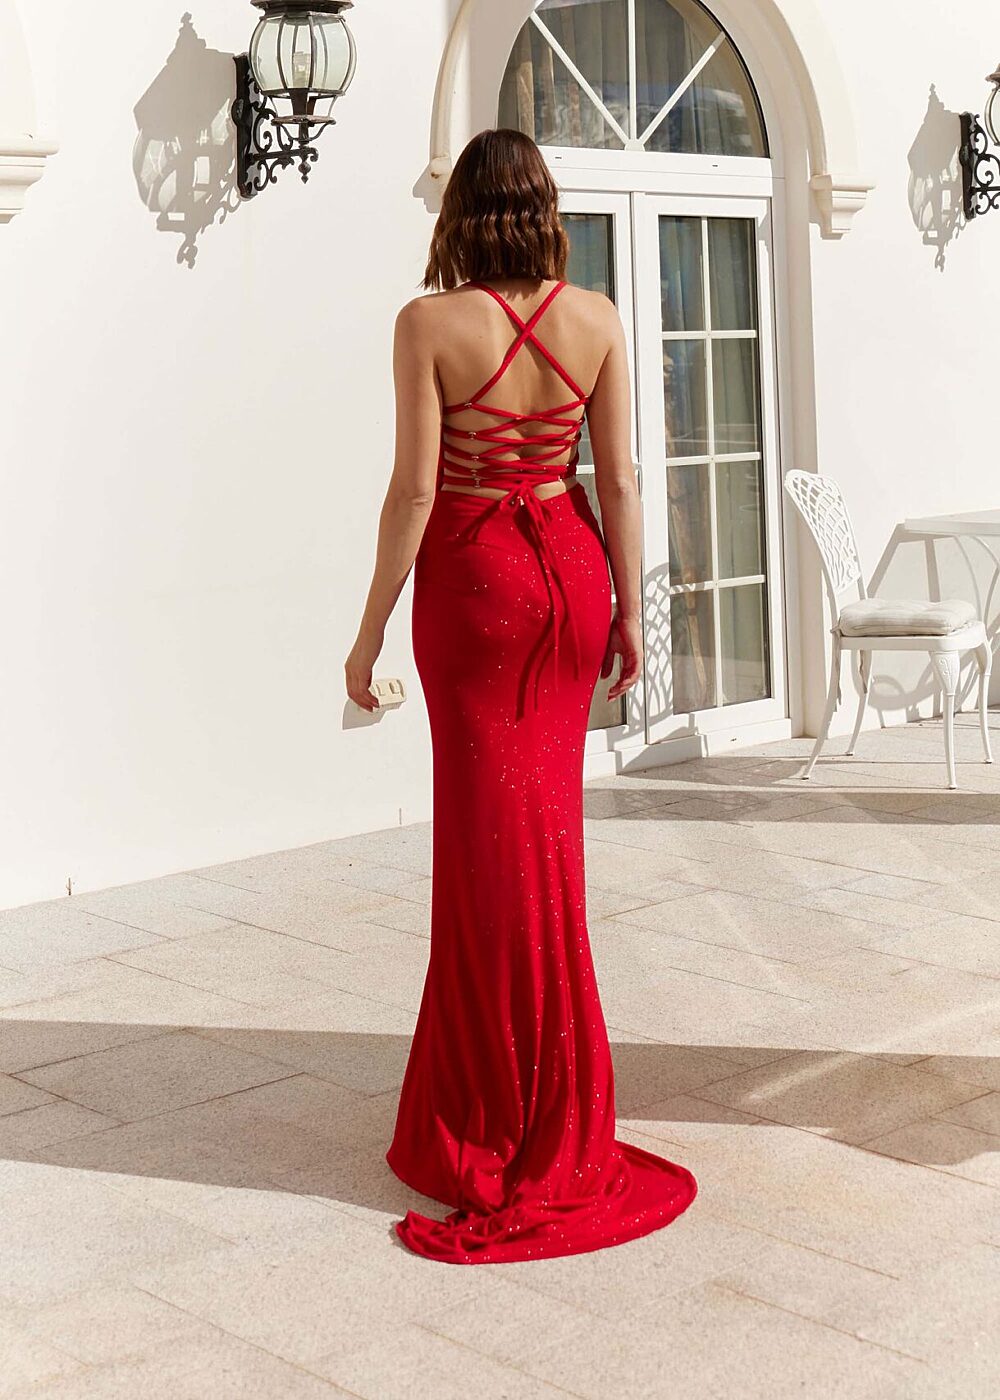 Sloane PO995 Evening & Formal dress by Tania Olsen Designs